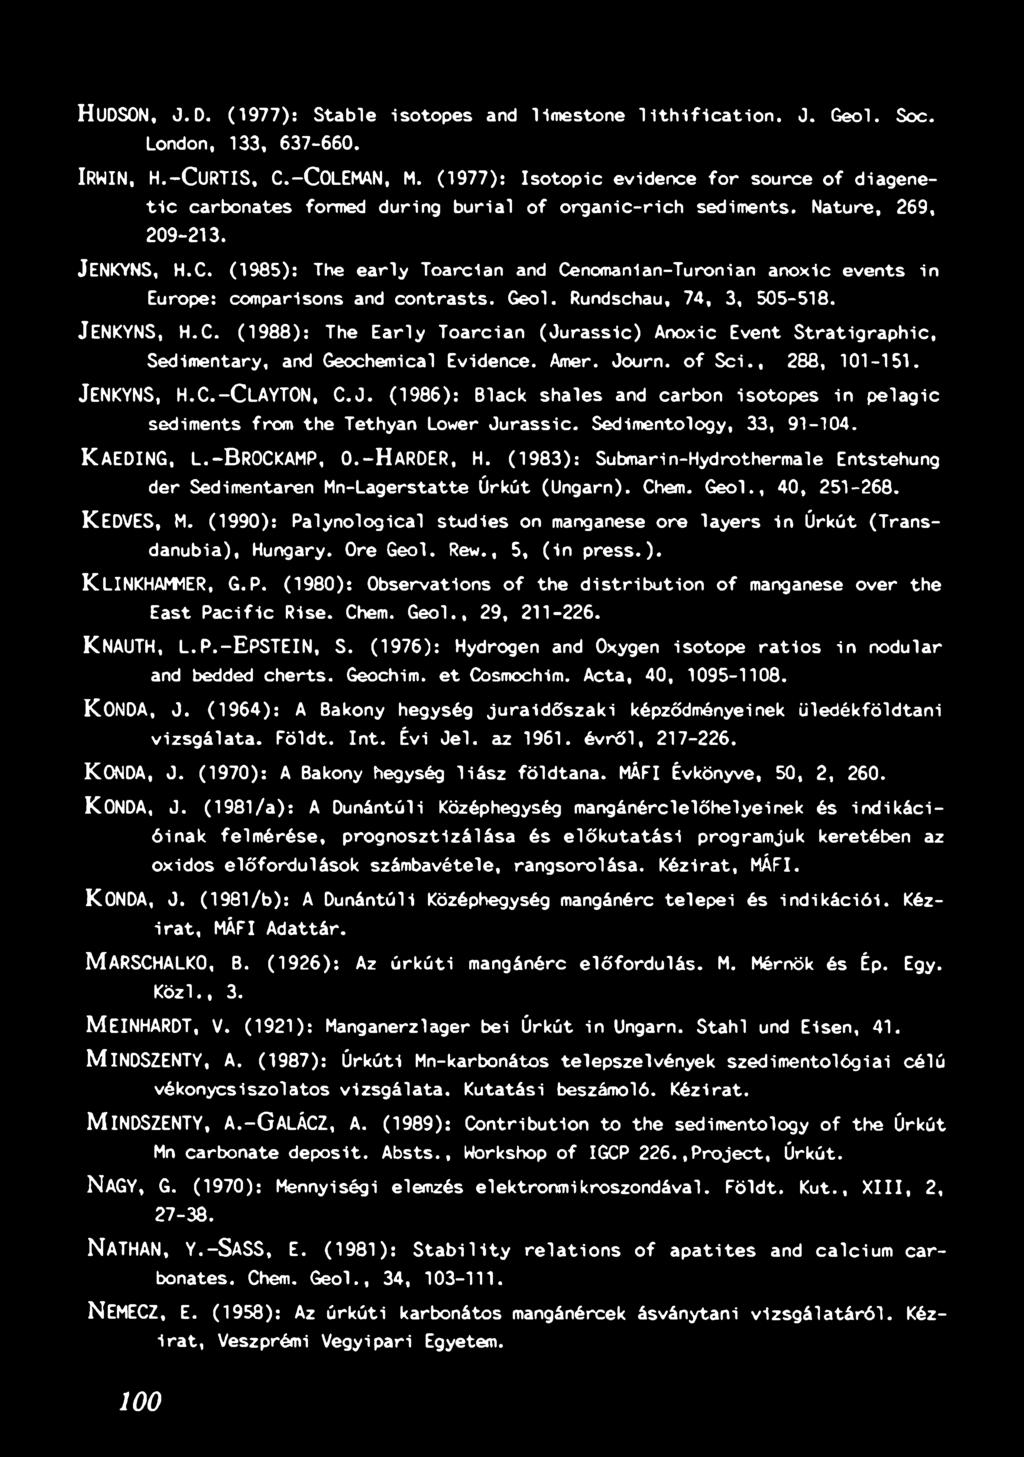 Sedim entology, 33, 91-104. KAEDING, L.-BROCKAMP, 0. - H a r d e r, H. (1983): Submarin-Hydrothermale Entstehung dér Sedimentaren M n-lagerstatte Úrkút (Ungarn). Chem. G e o l., 40, 251-268.